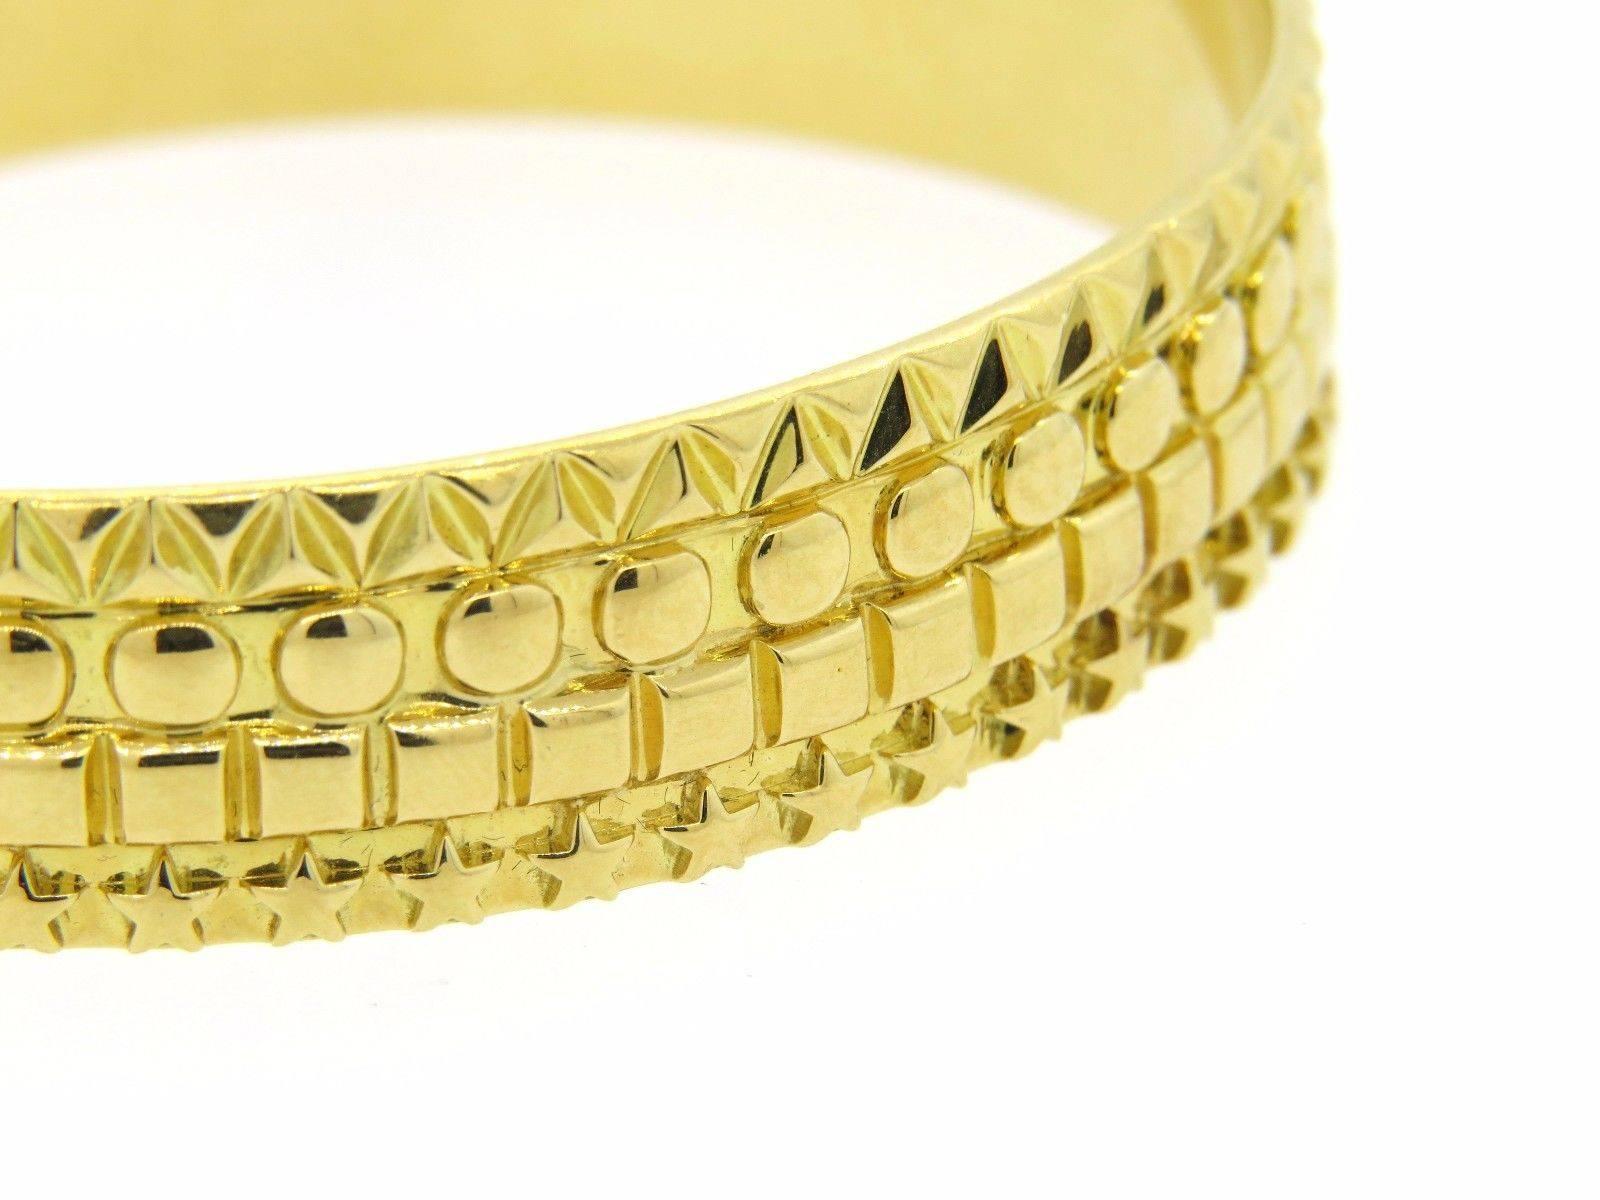 Women's Solange Azagury Partridge Gold Patterned Bangle Bracelet